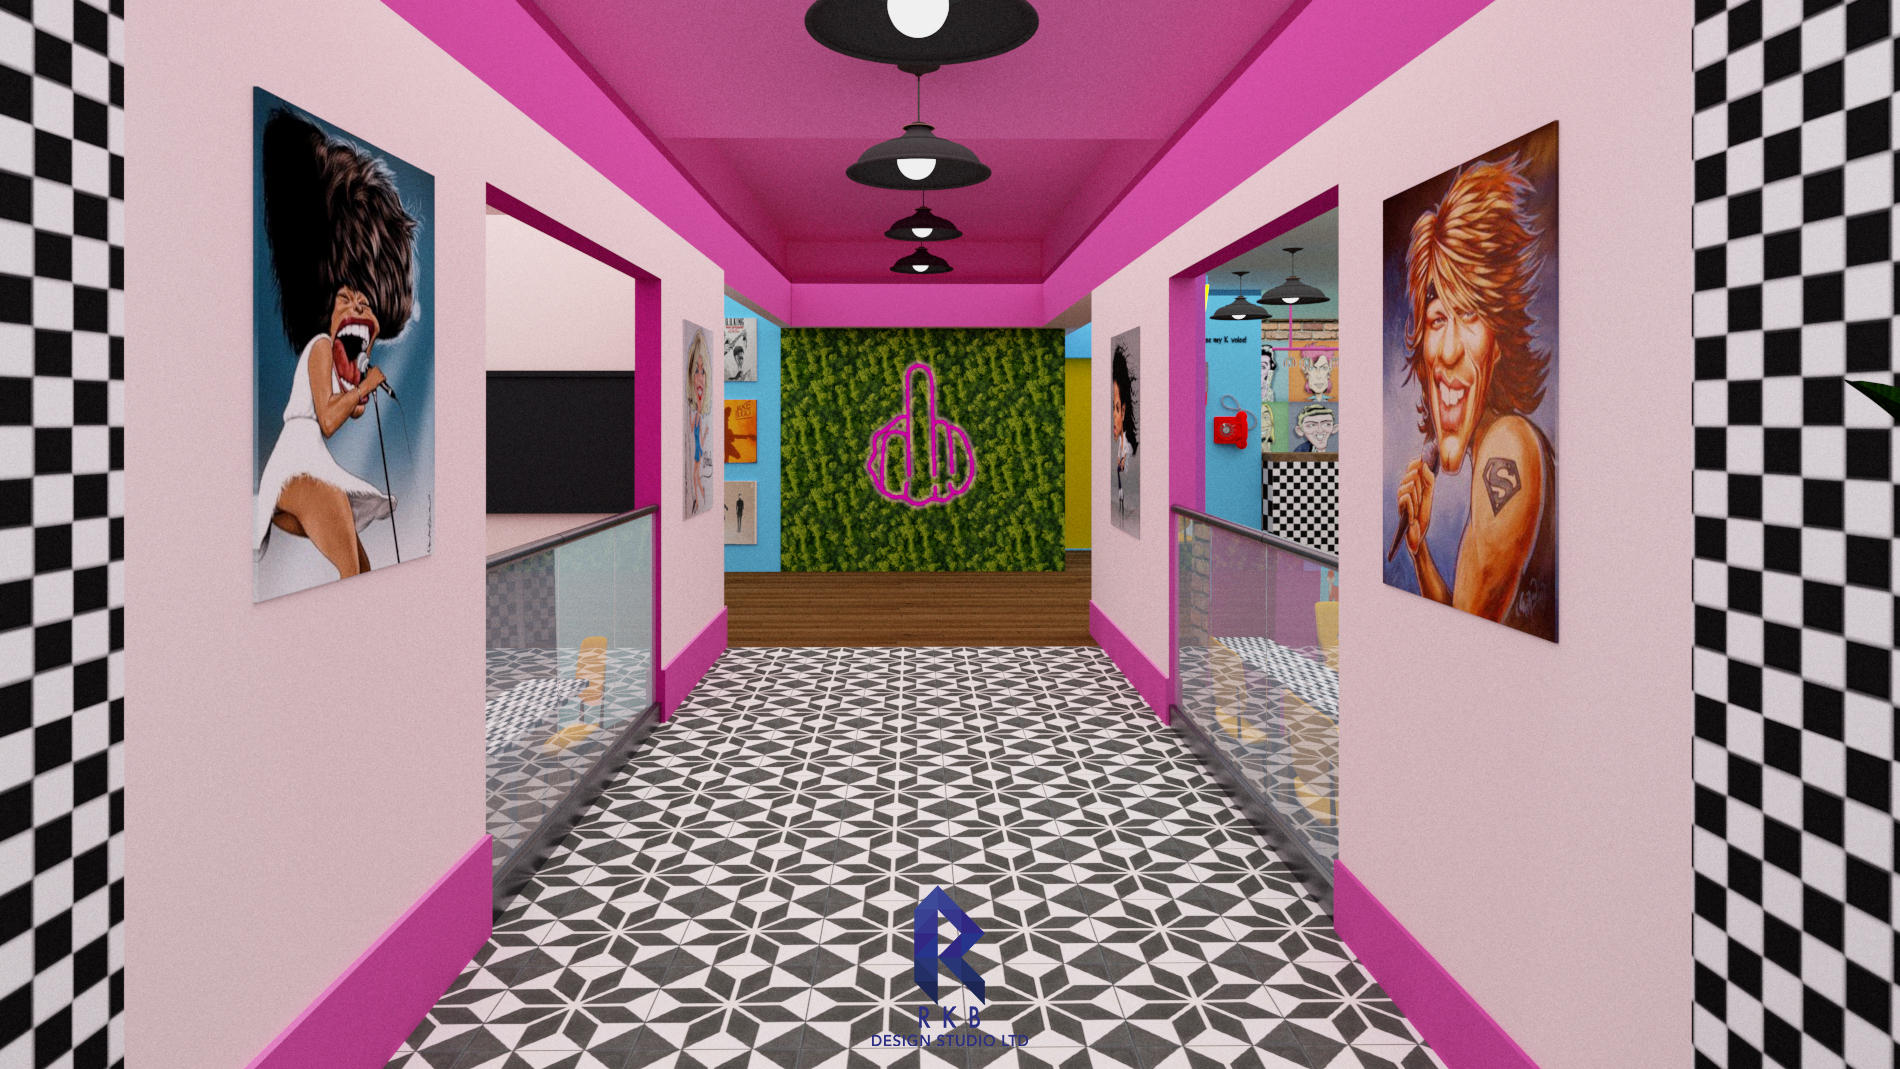 Karens diner interiors pink and blue